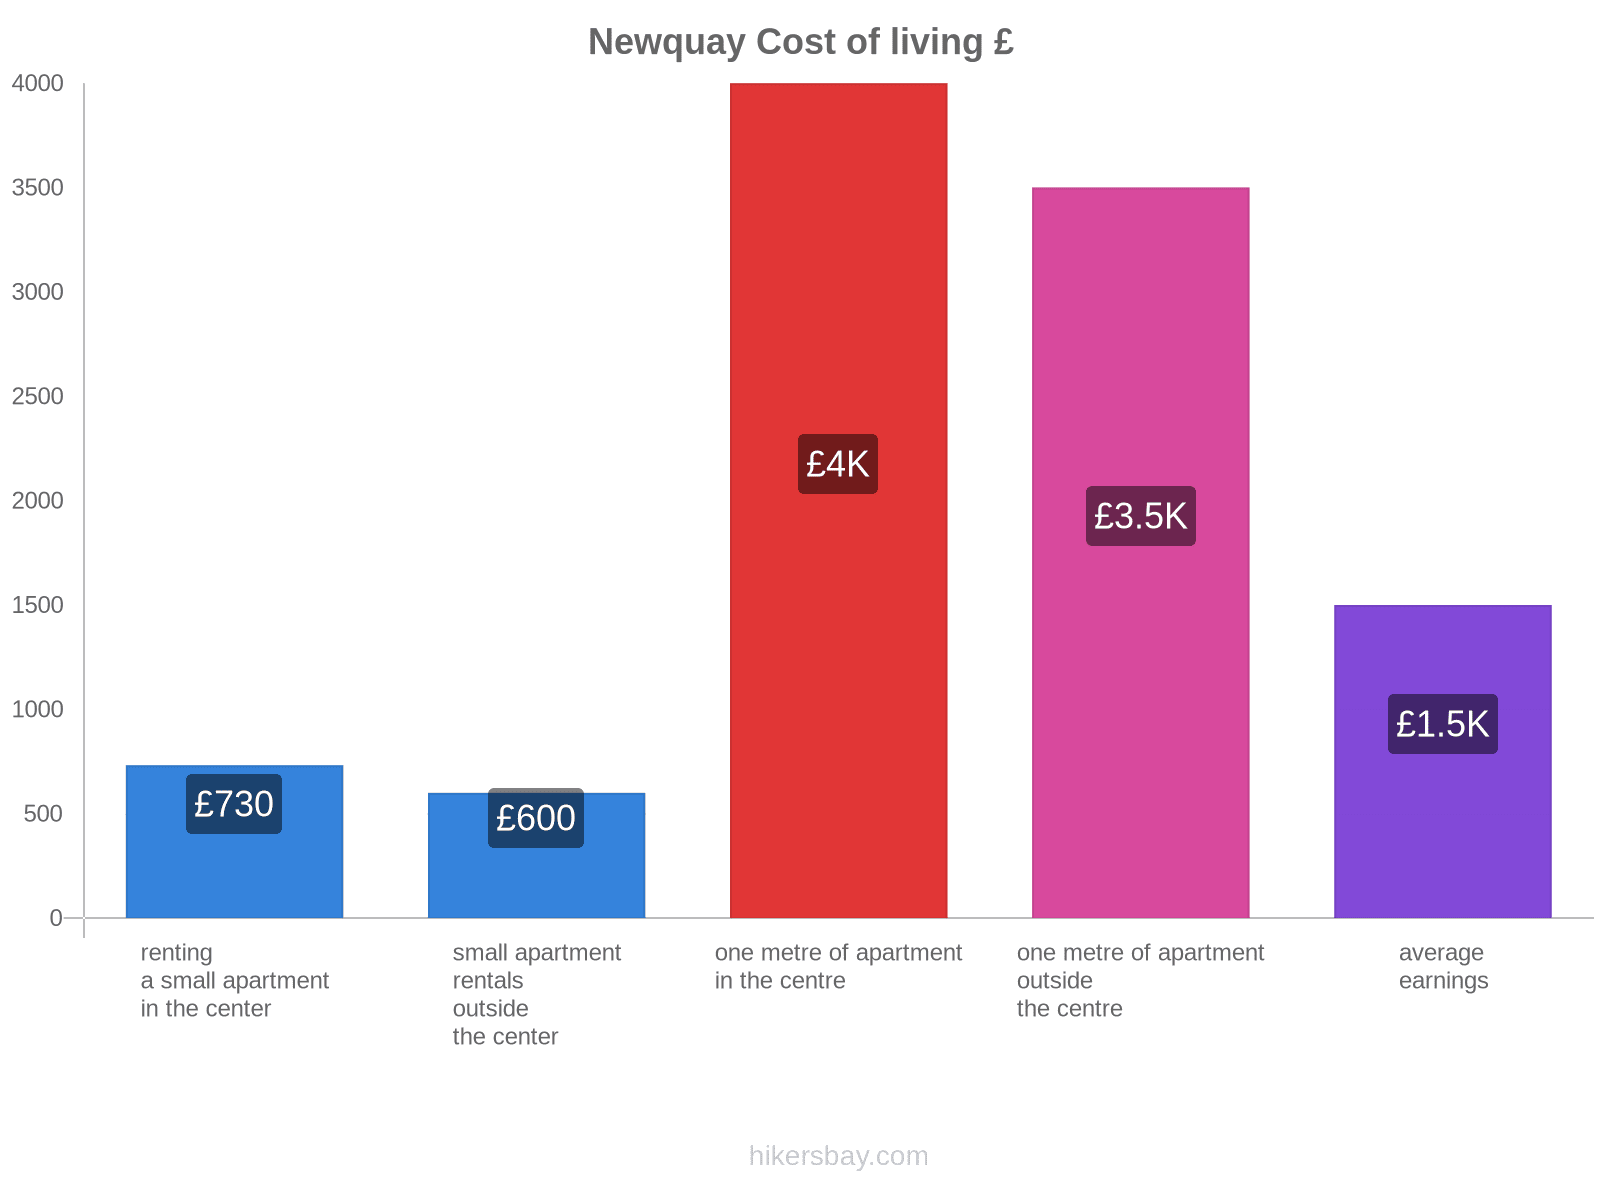 Newquay cost of living hikersbay.com